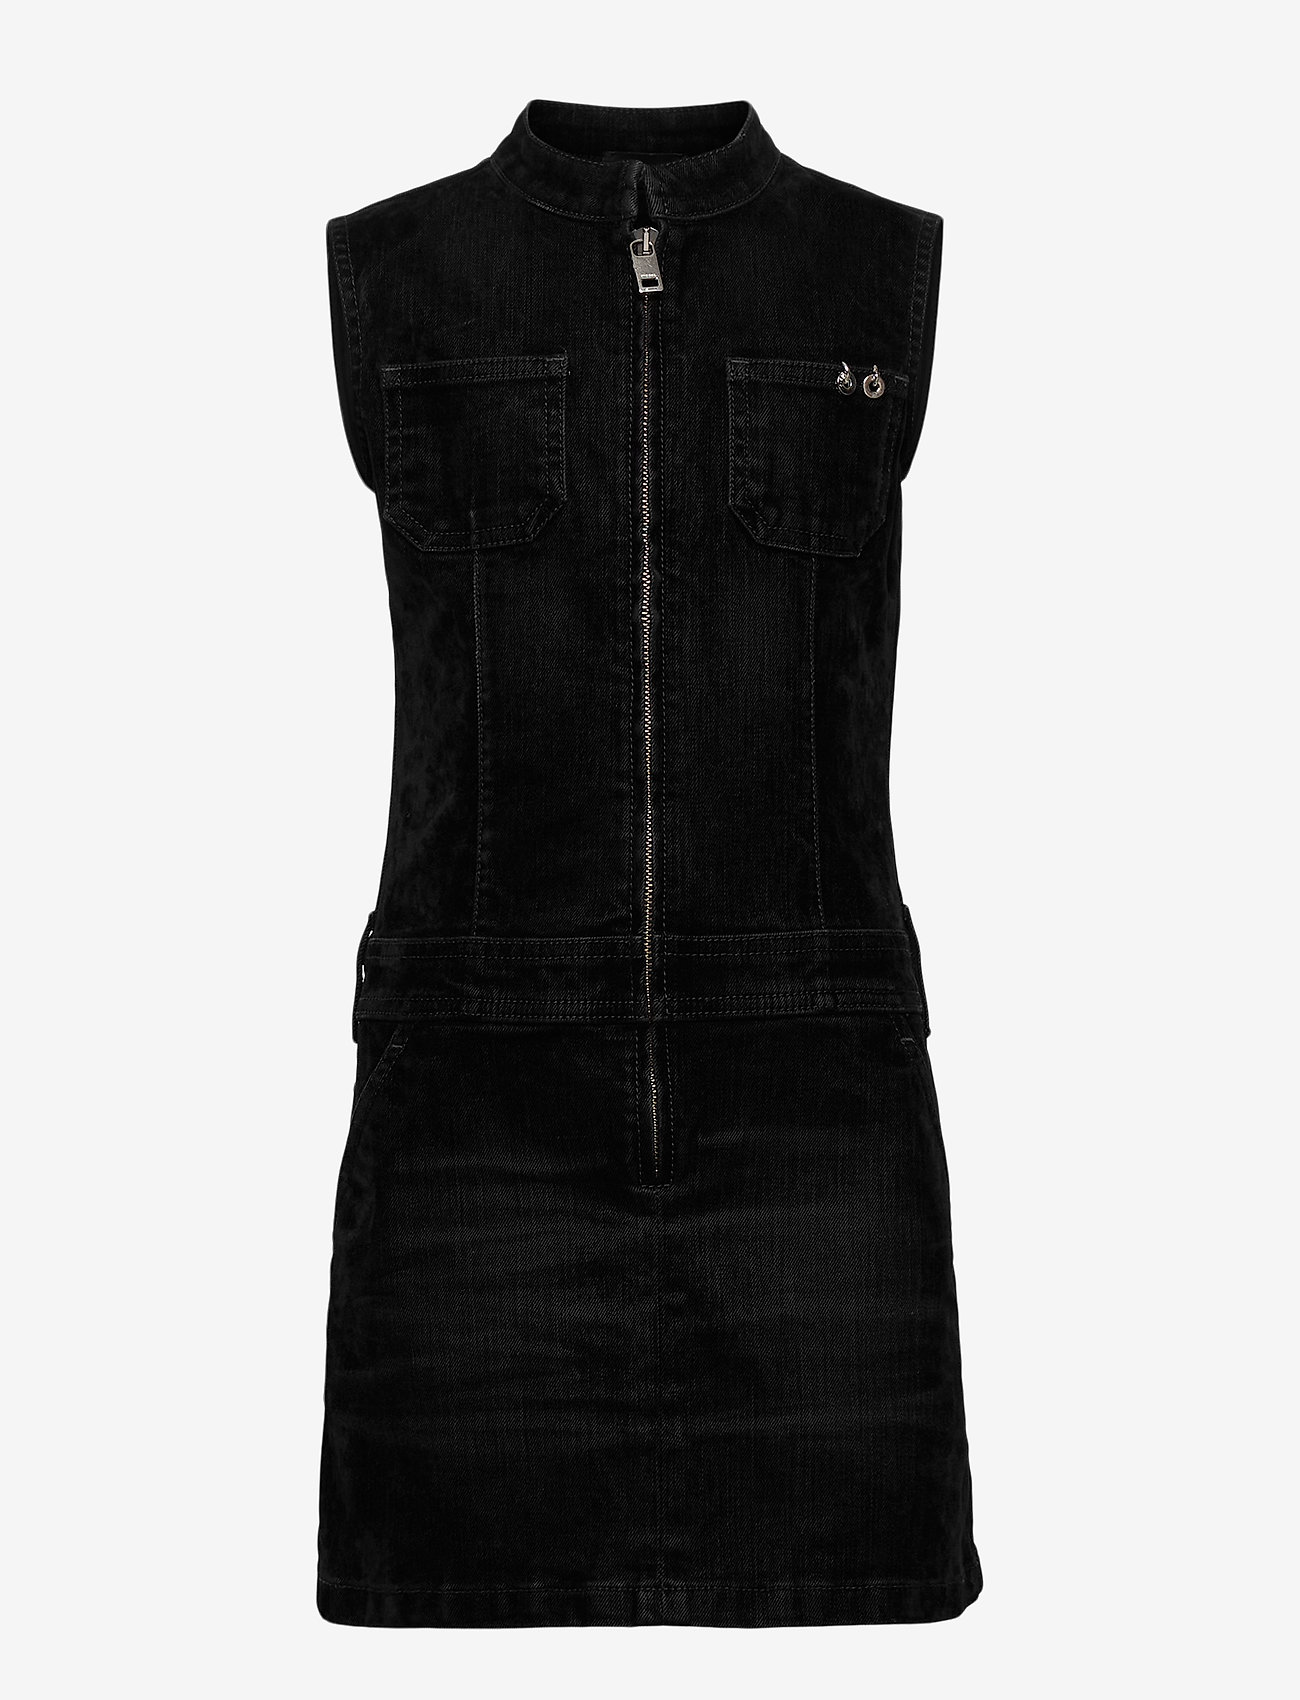 Diesel - DERINDO DRESS - sleeveless casual dresses - denim nero - 0